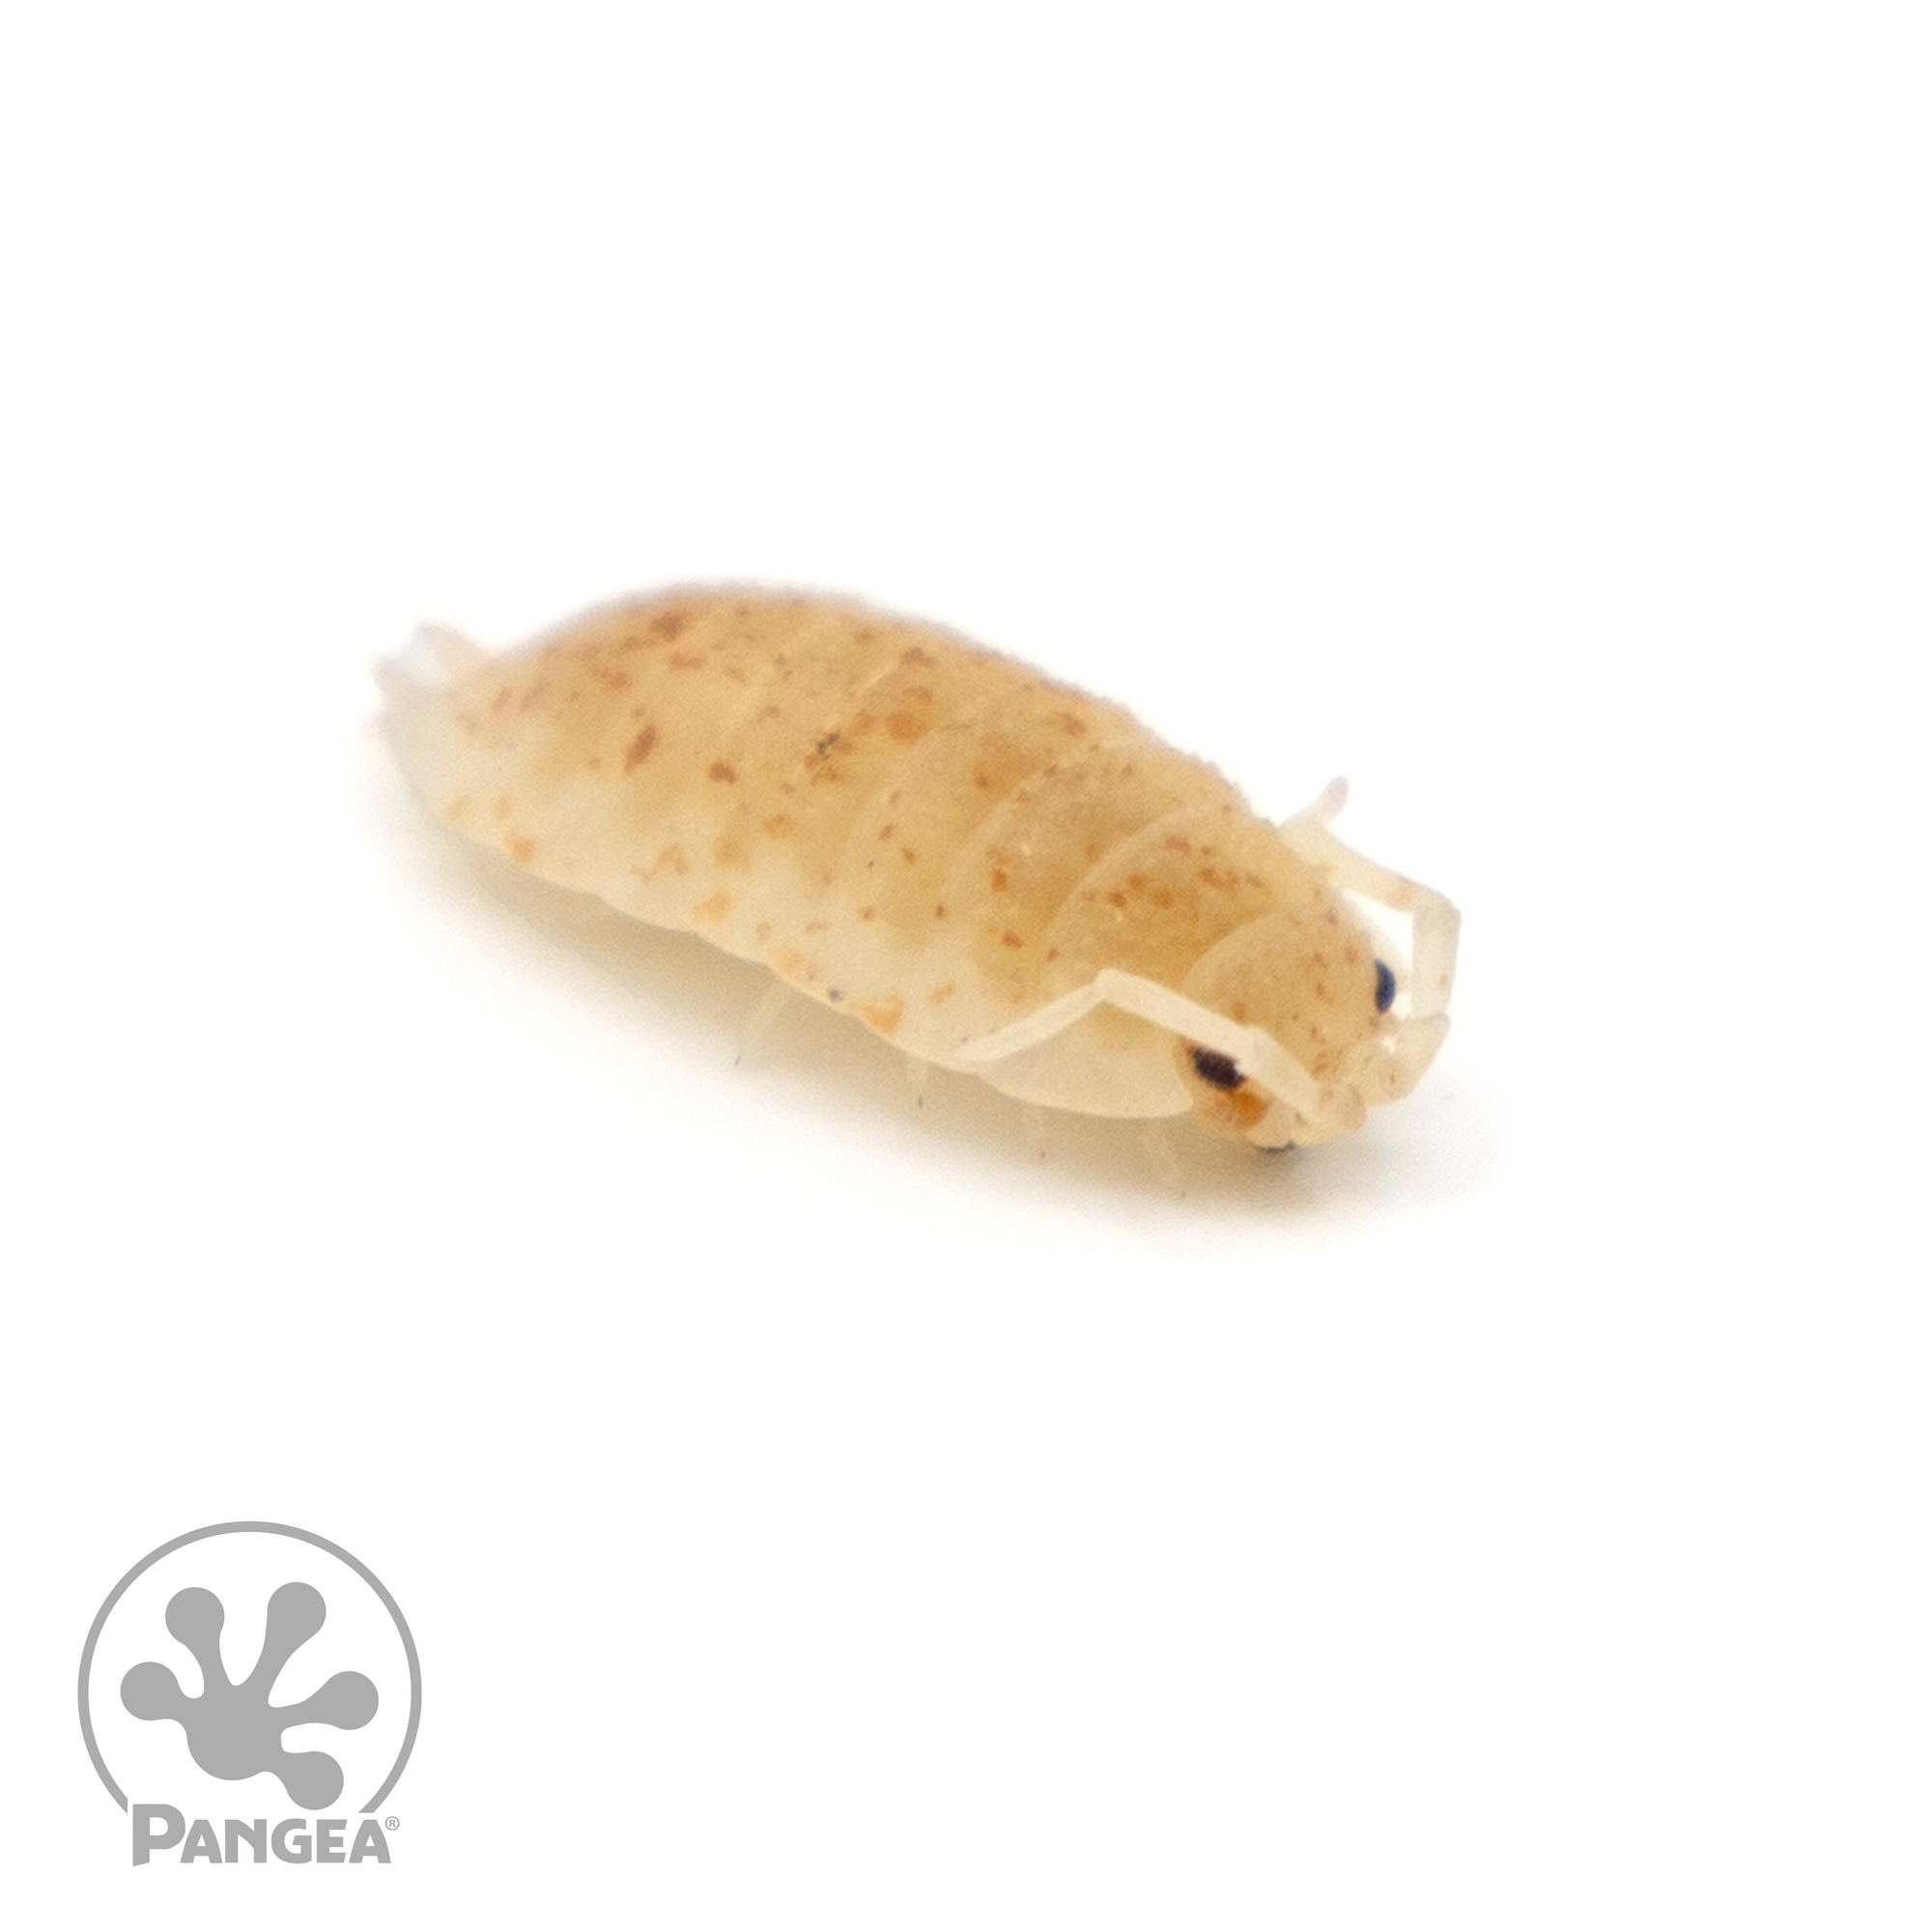 Porcellio scaber 'Orange Dalmatian' Isopod